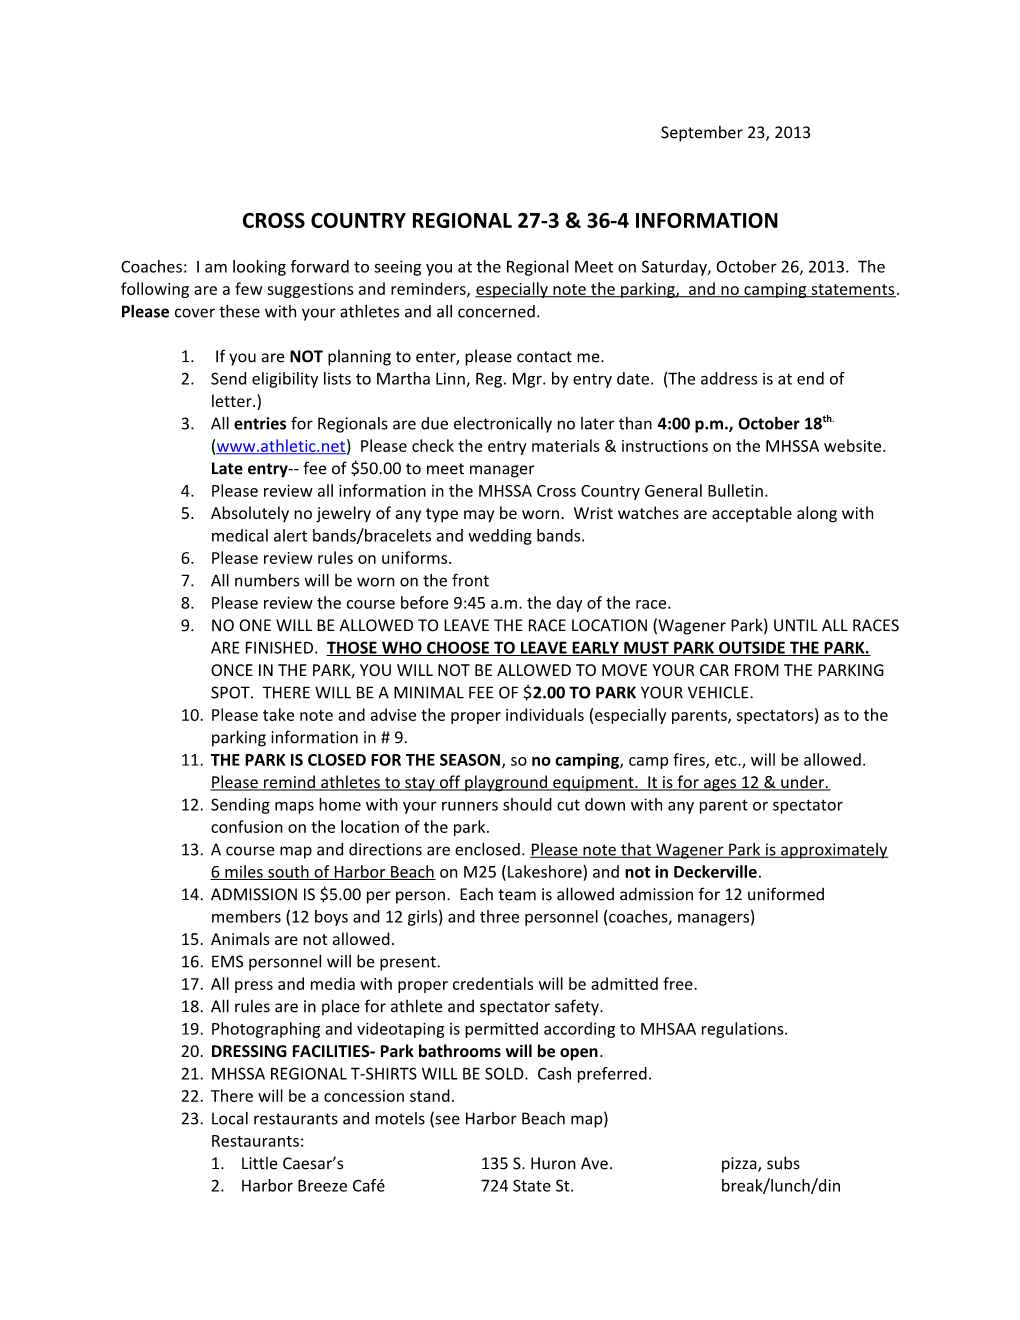 Cross Country Regional 27-3 & 36-4 Information